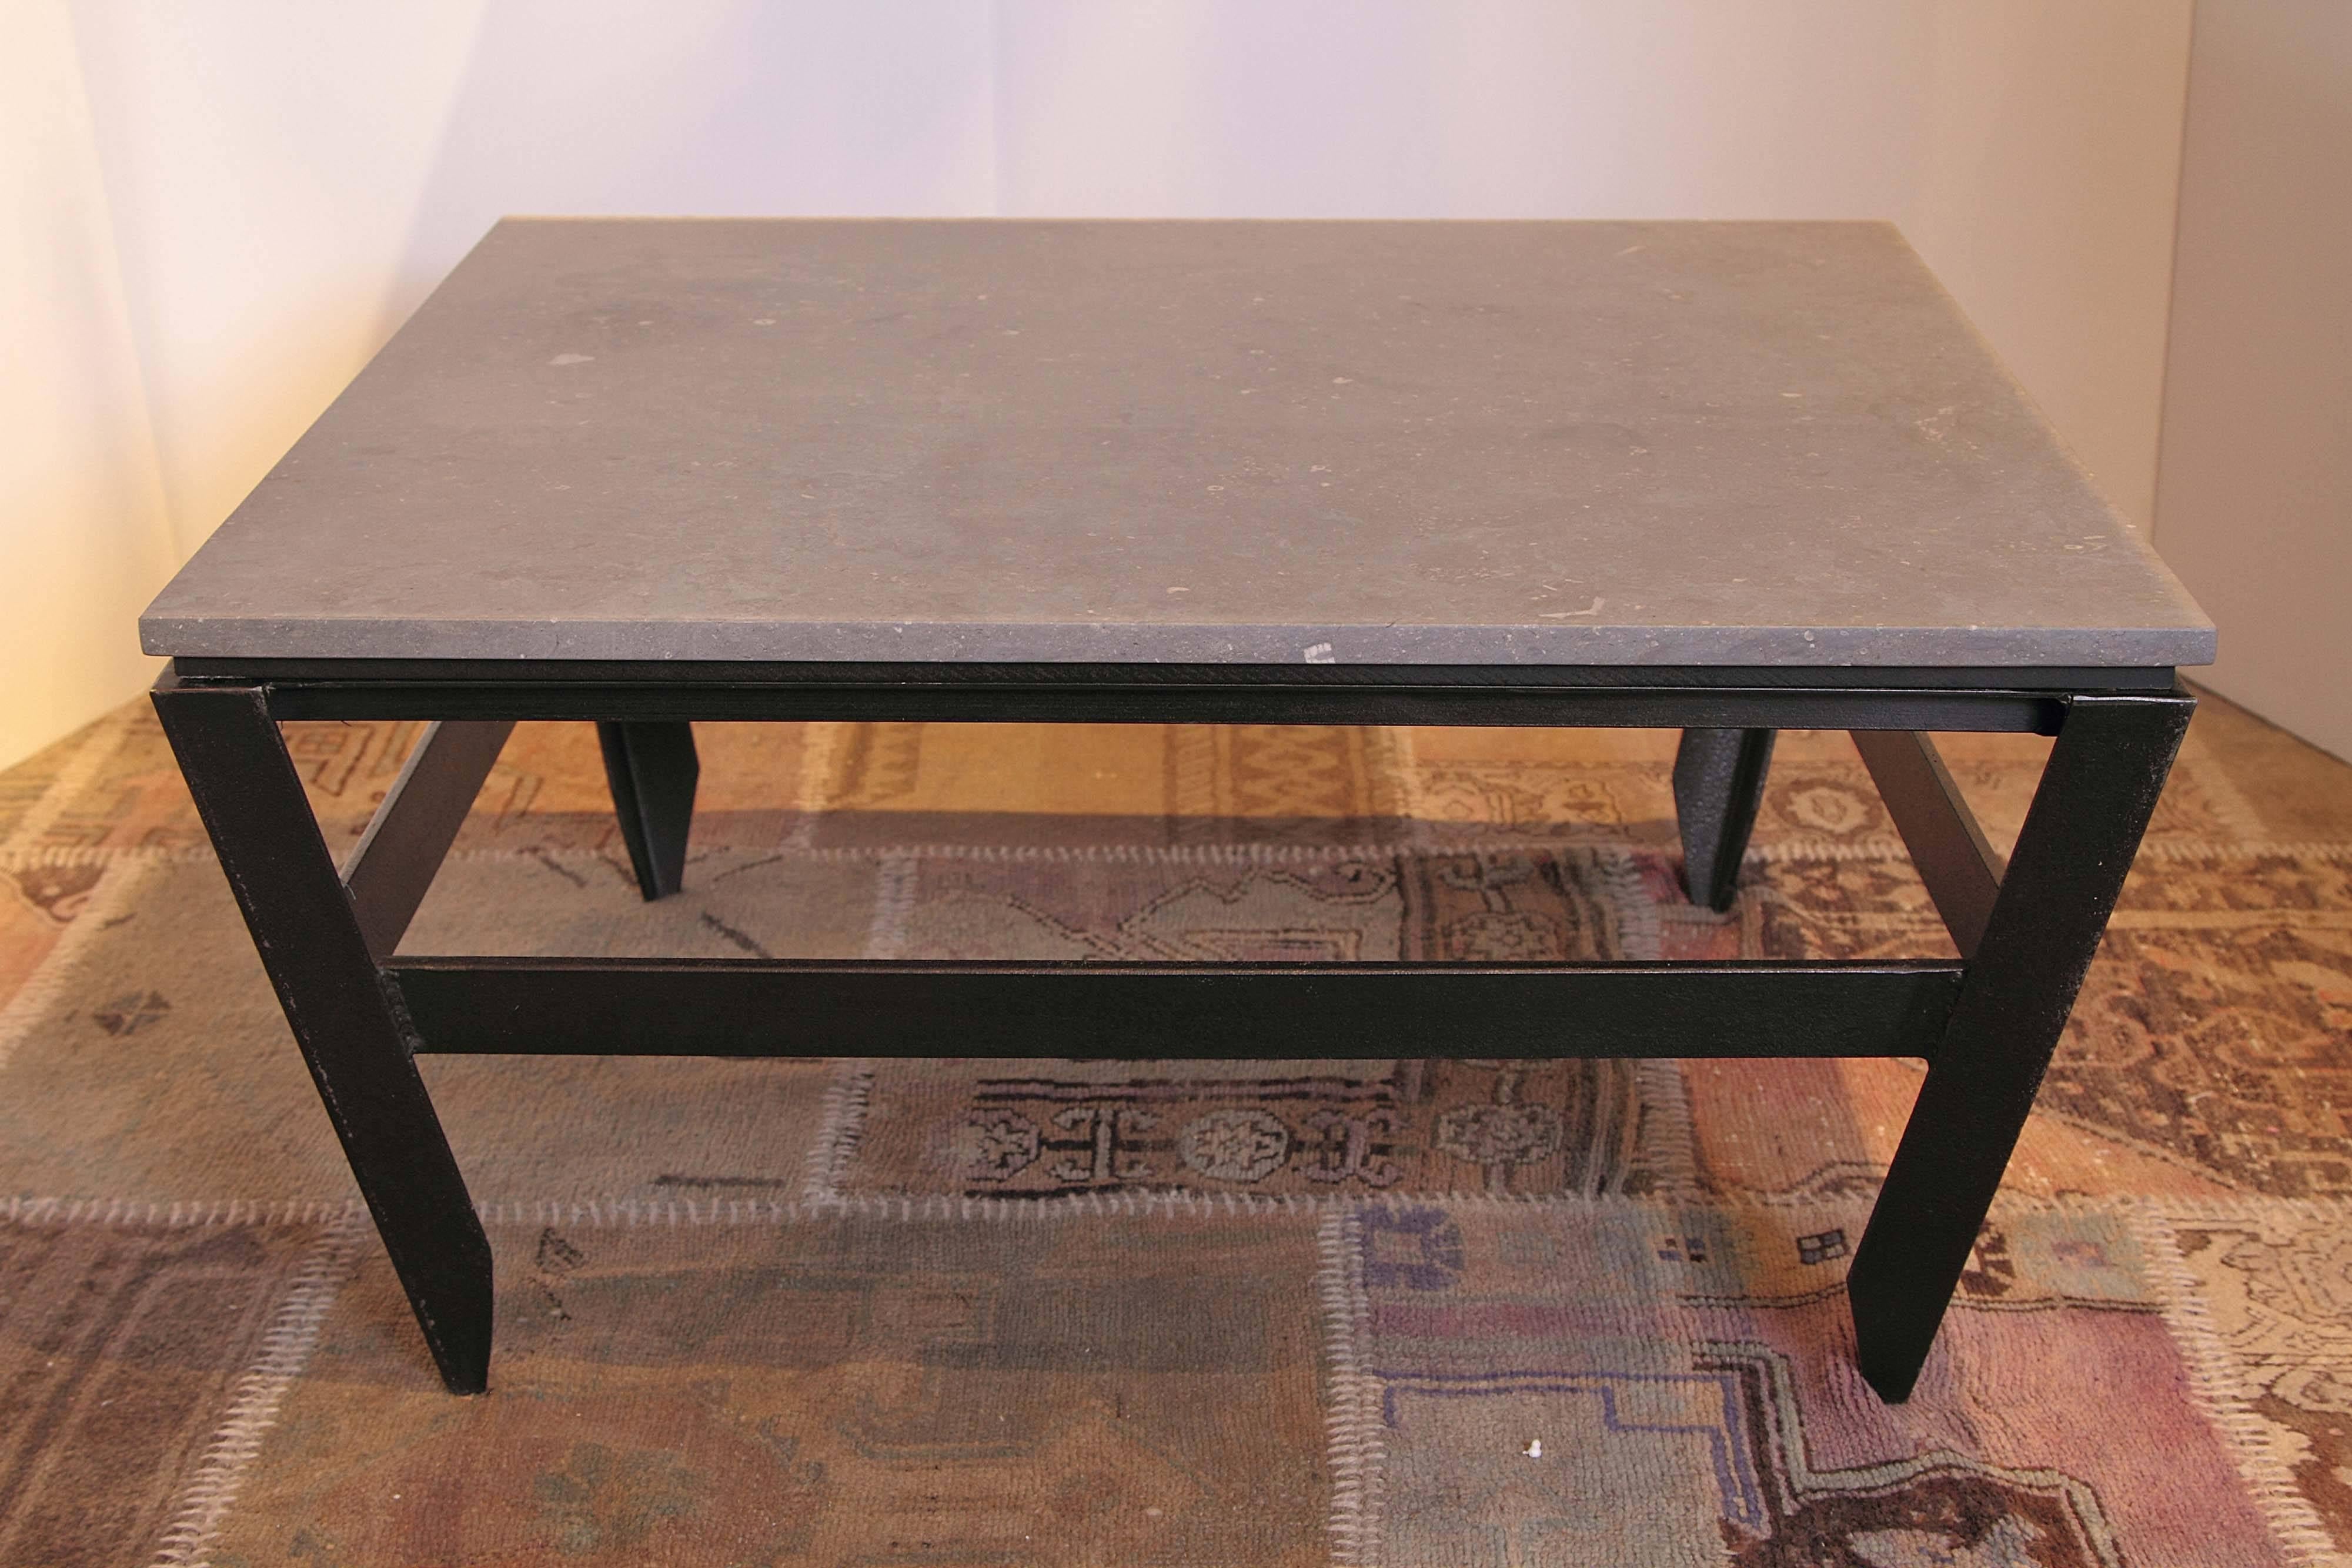 French Modern Angled Coffee Table.1960s slanted leg design table base .
Jura grey limestone top
Origin: France, 1960s.